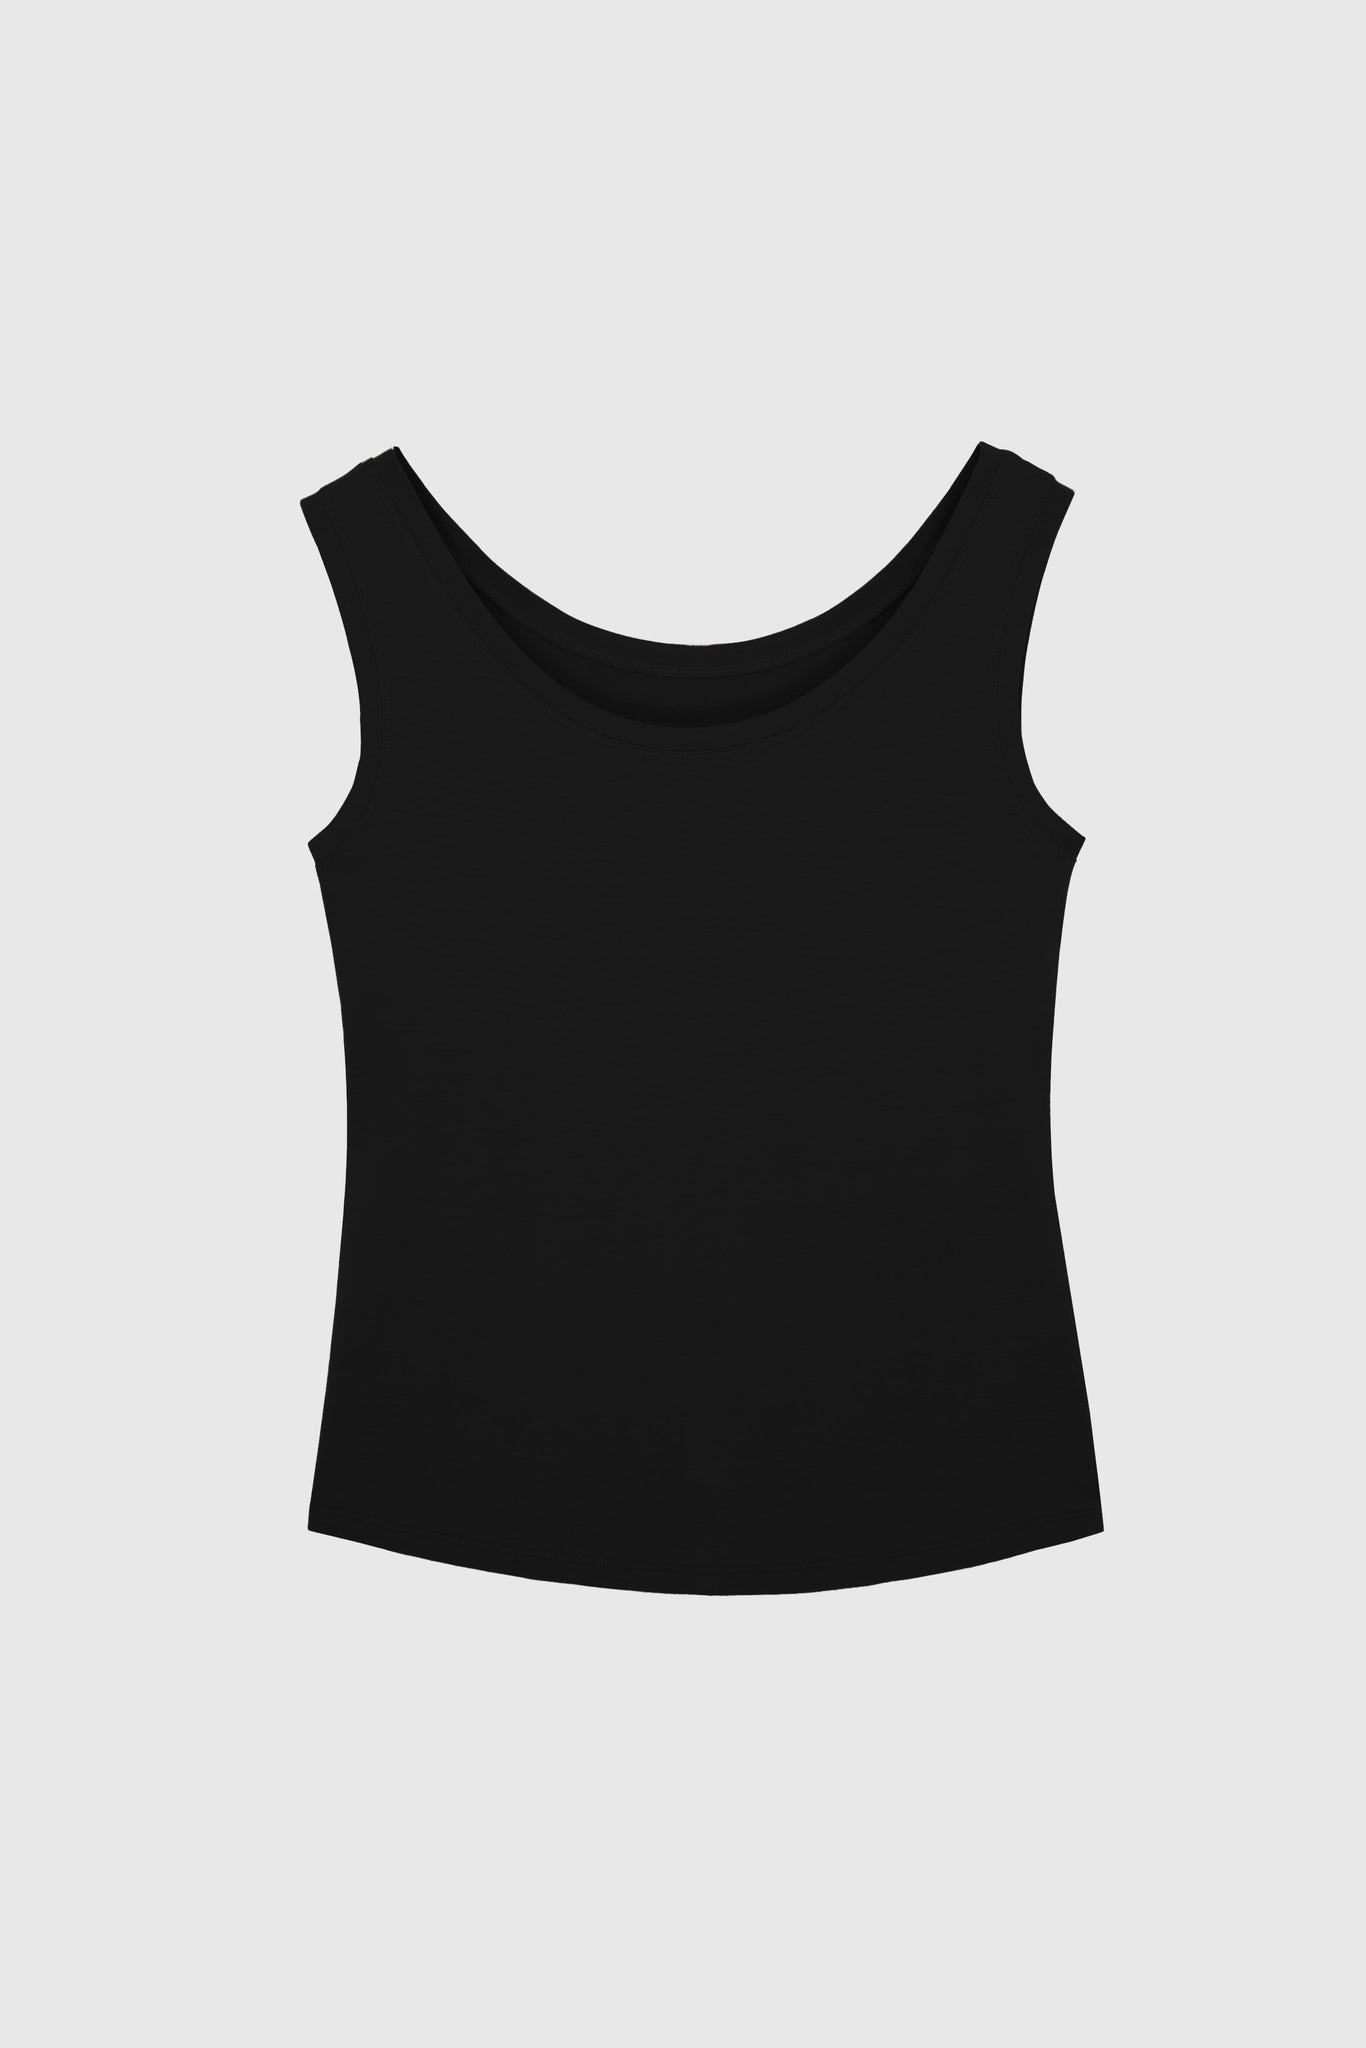 Black Sleeveless Micro Modal Vest - Women's Sleeveless Vest - Quality Sleeveless Vest - Core Basics Lavender Hill Clothing